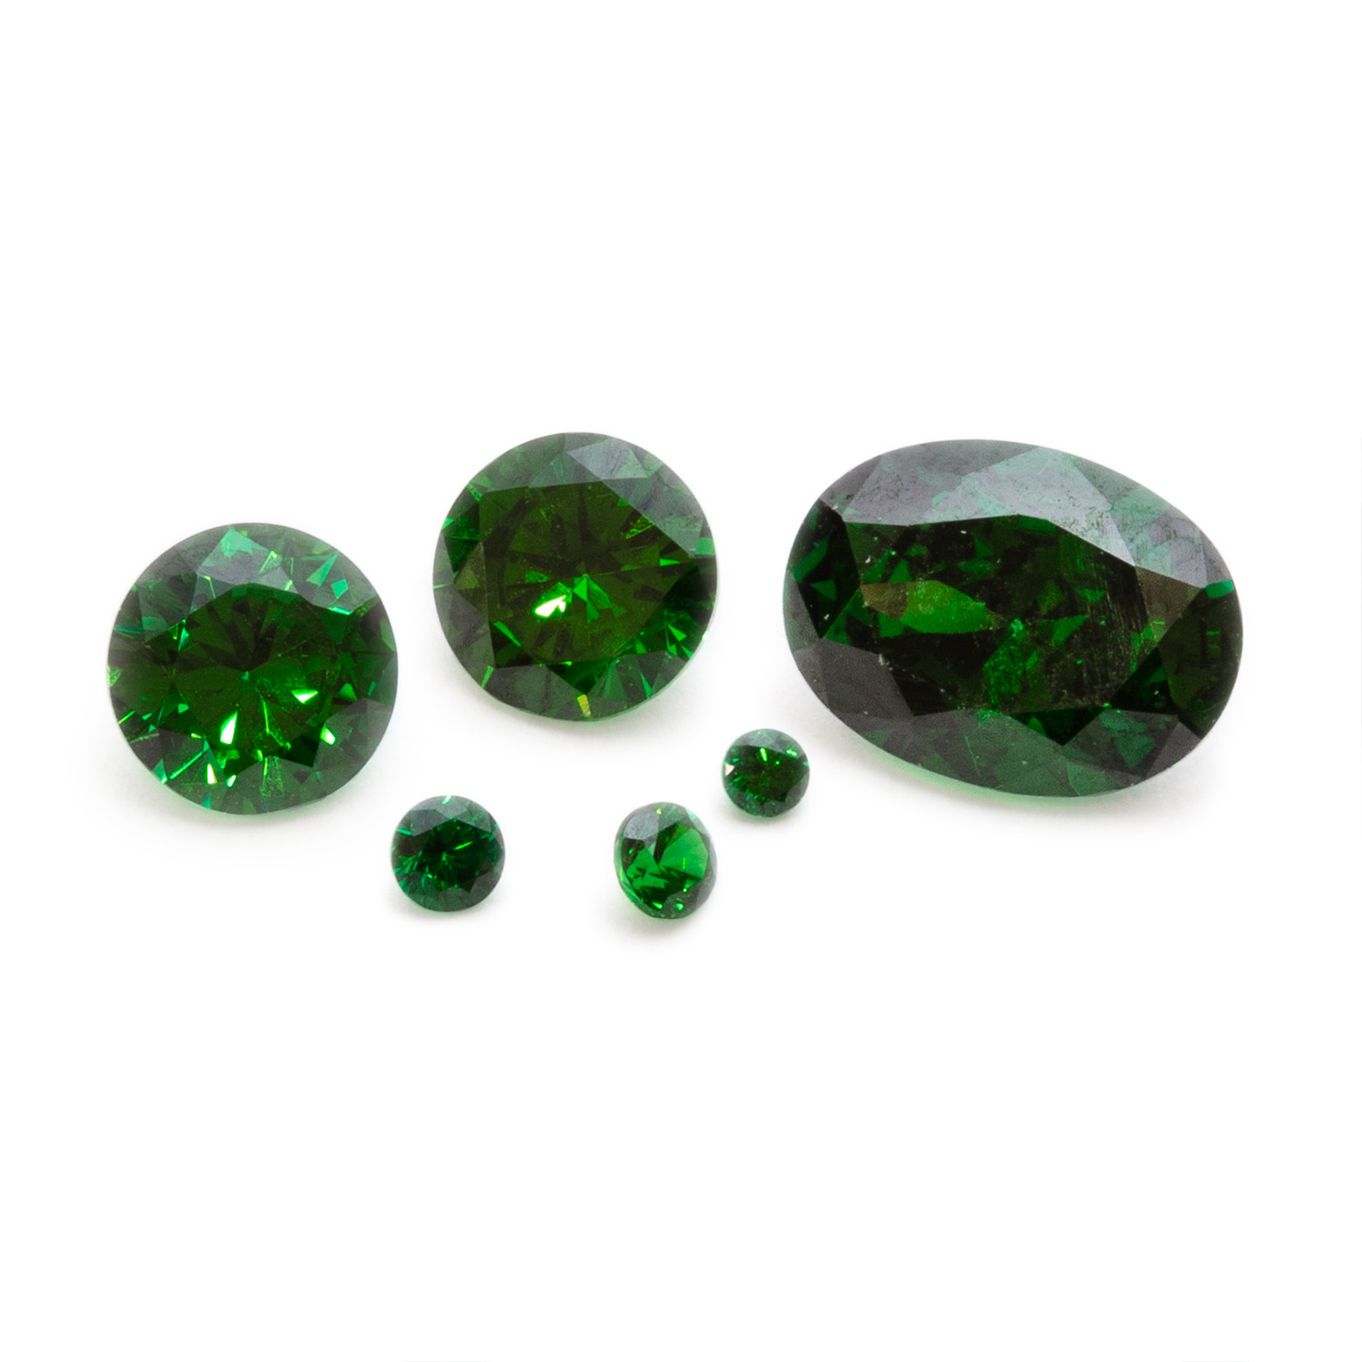 Emerald Coloured Cubic Zirconia Faceted Stones